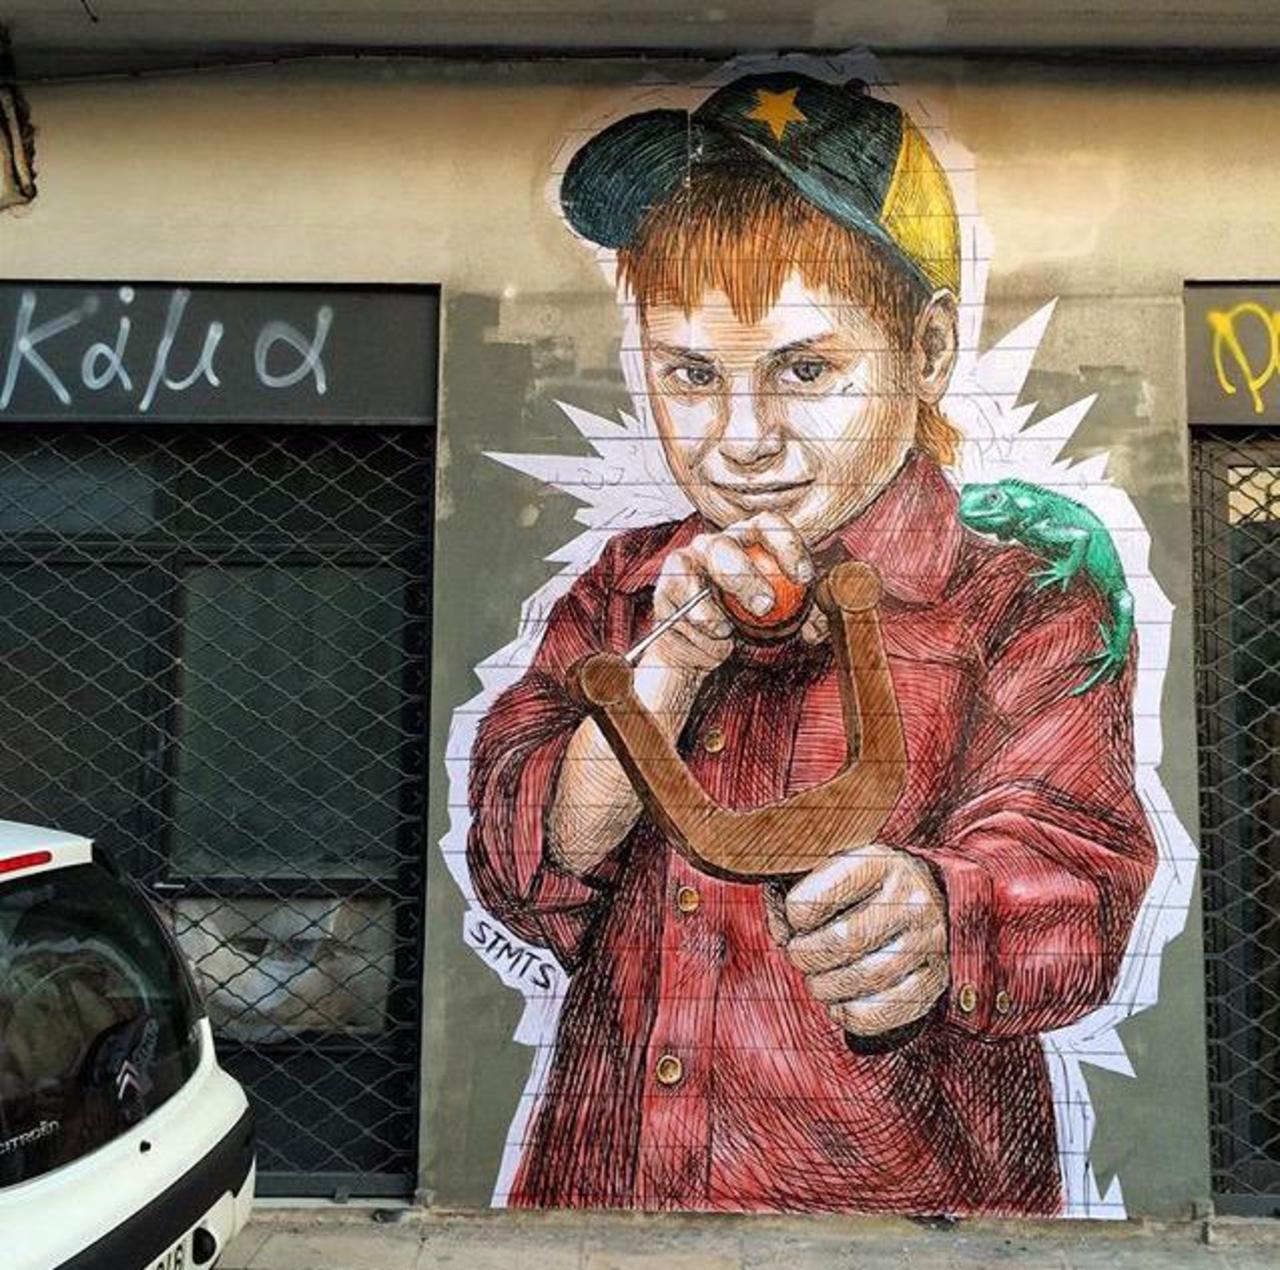 Street Art by STMTS in Athens

#art #graffiti #mural #streetart http://t.co/OZXZxJcB46